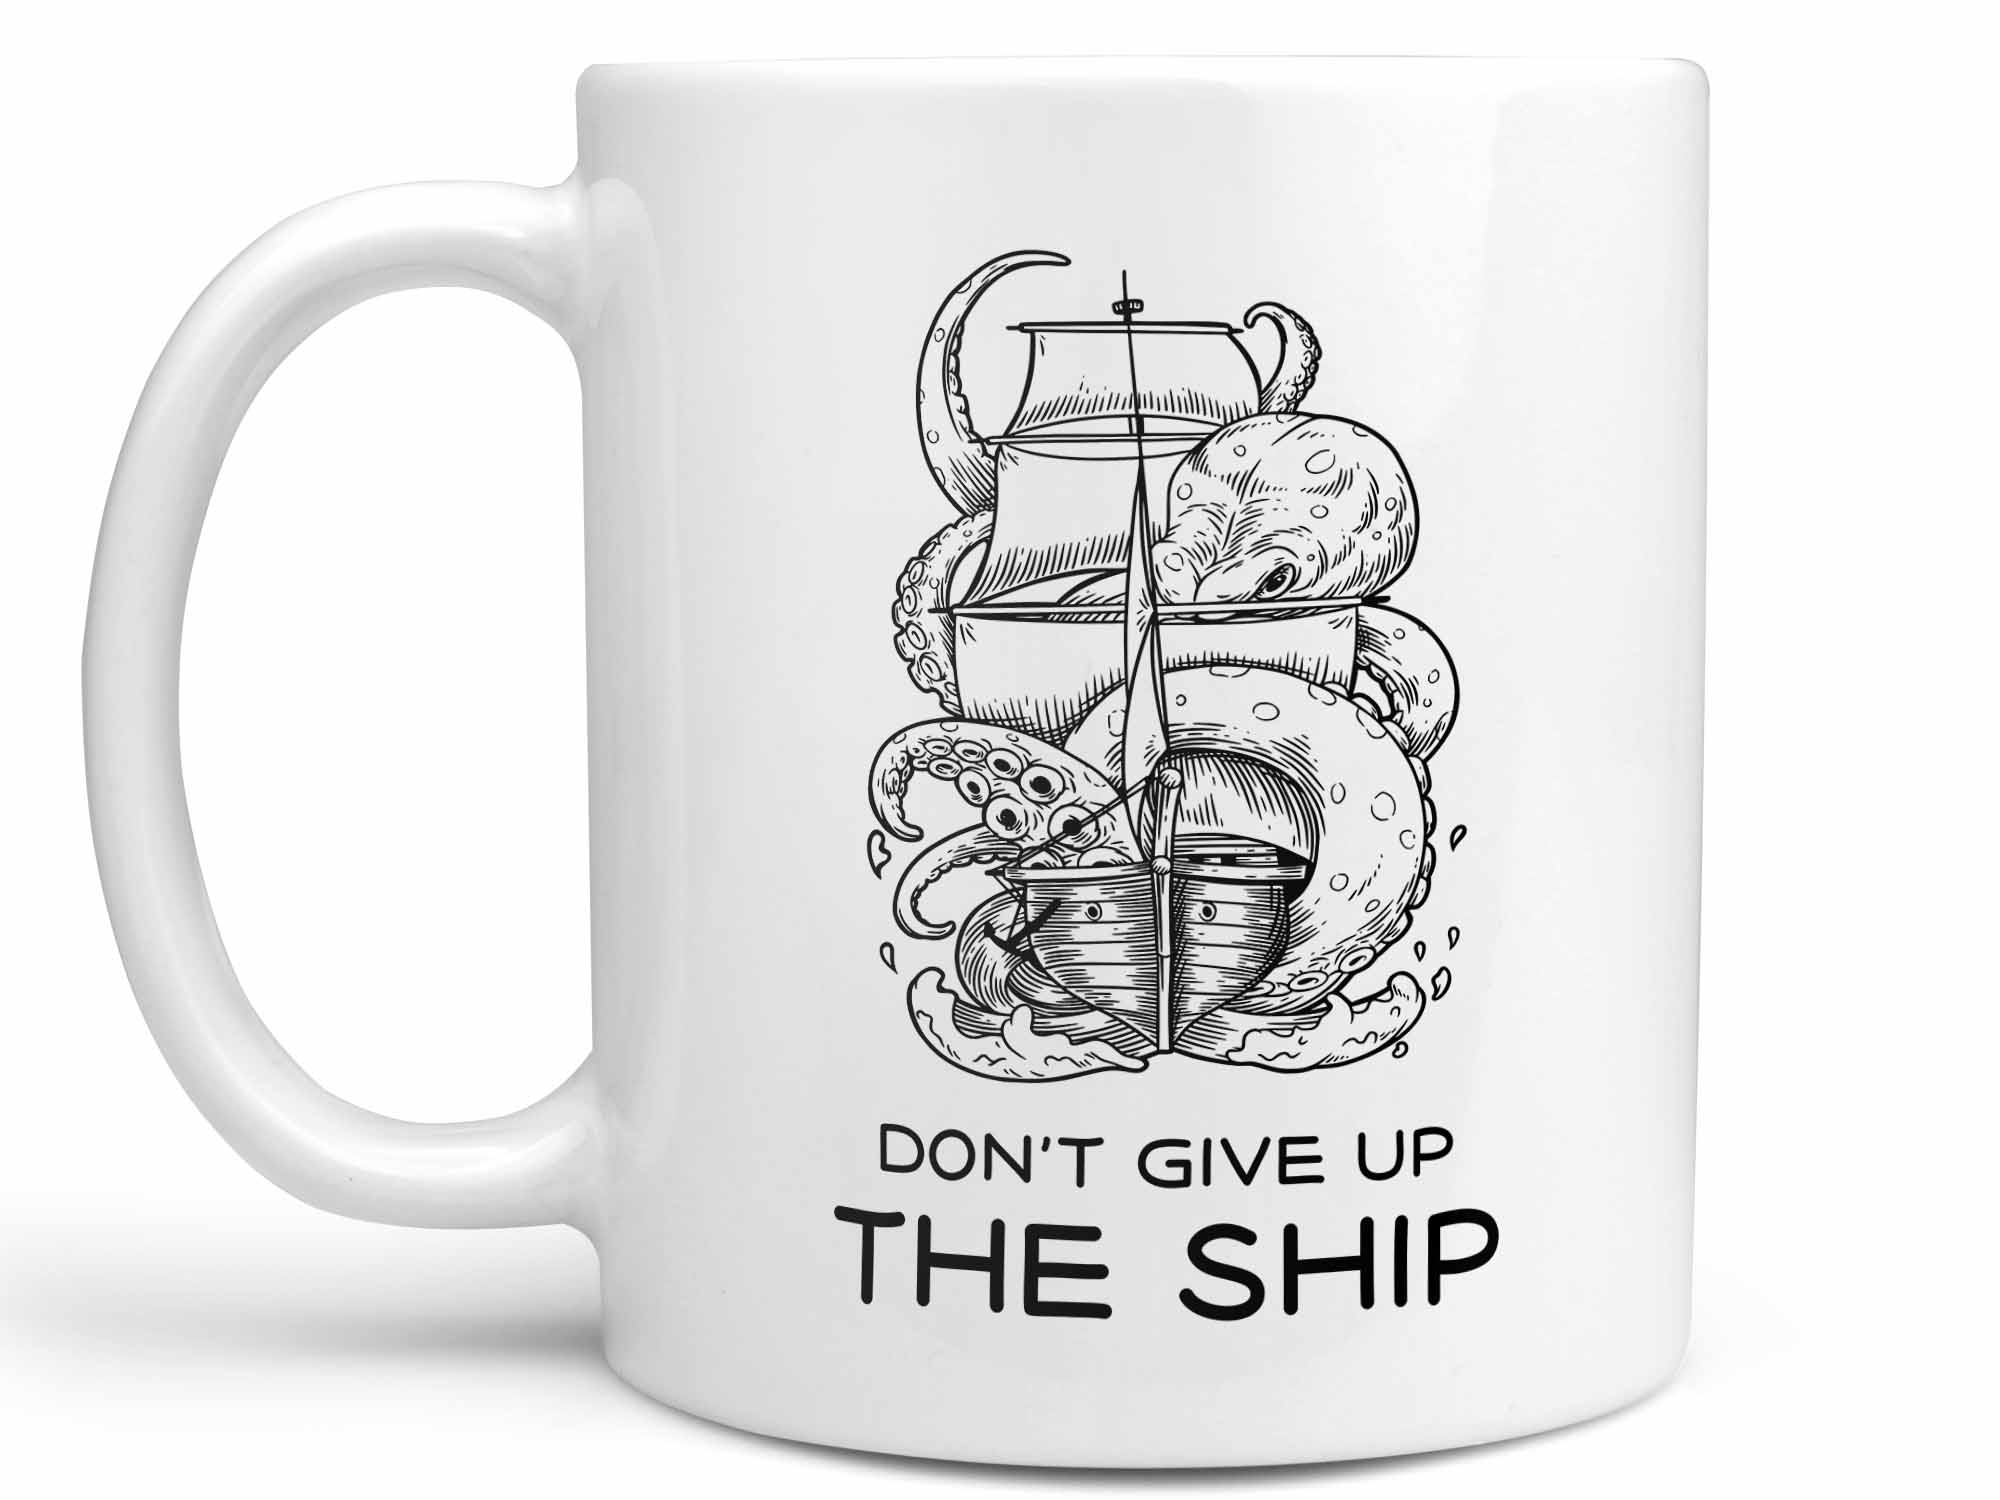 Don't Give the Ship Coffee Mug